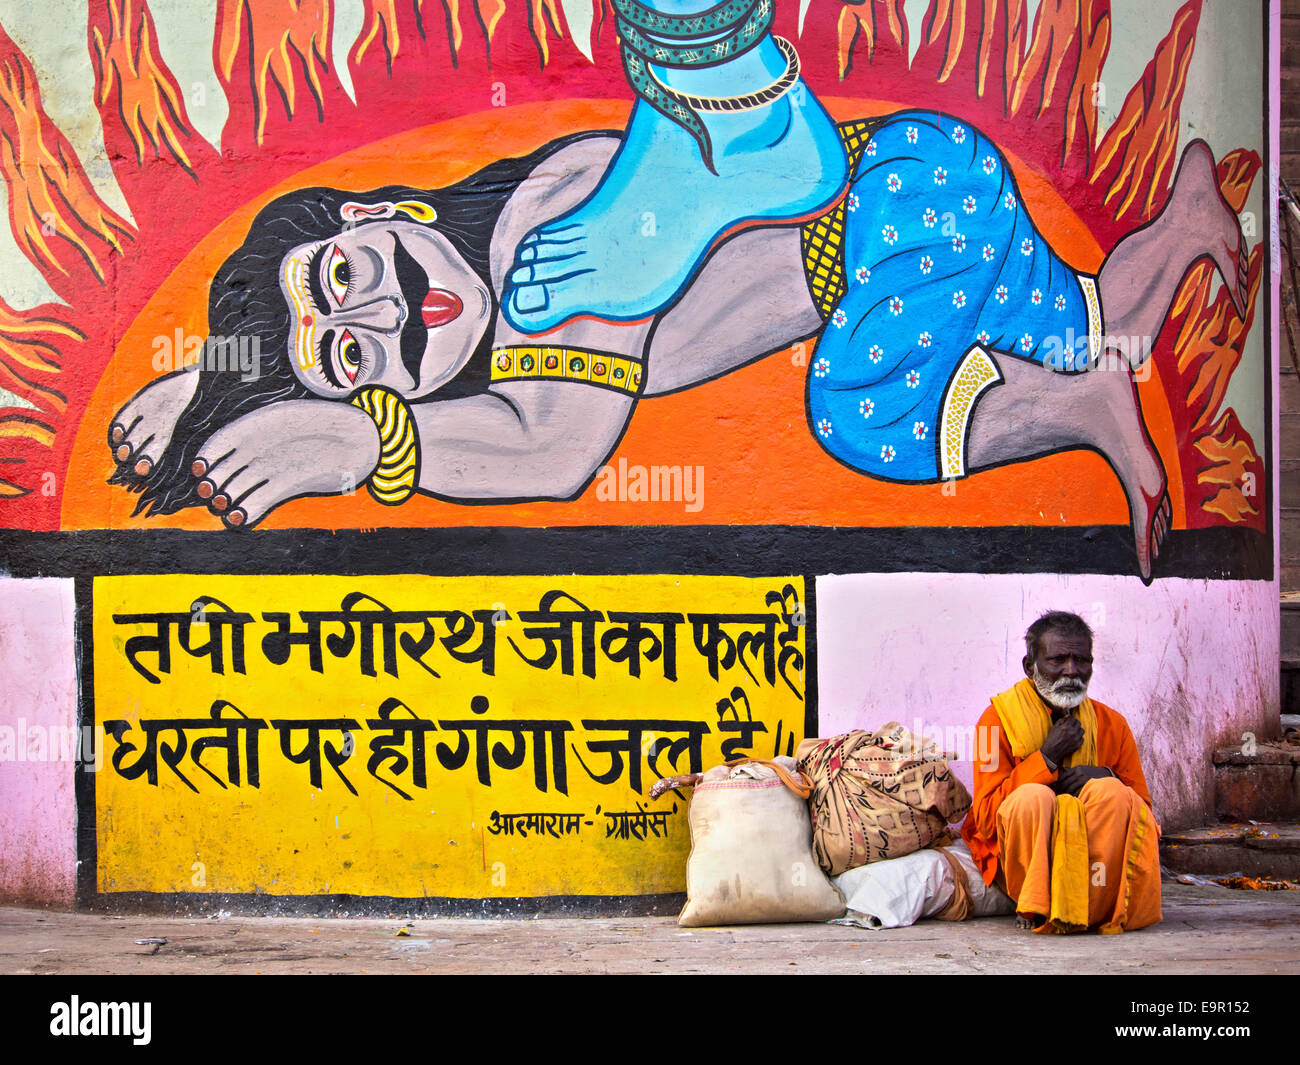 Indian man sitting in front of colorful street art mural in Varanasi, Uttar Pradesh, India. Stock Photo